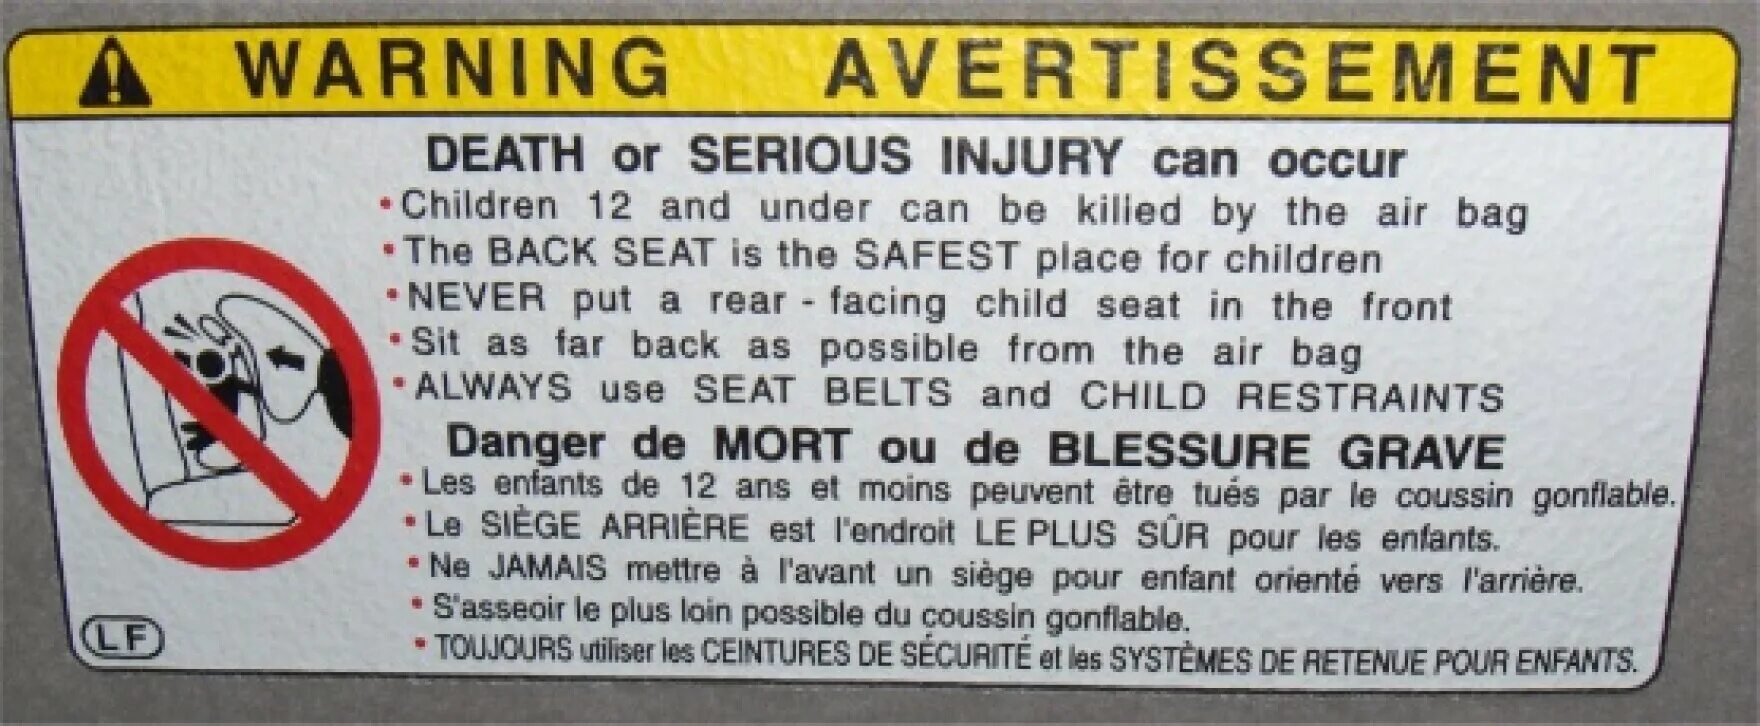 Warning airbag наклейка. Avertissement. Warning avertissement advertencia стикер. Блок Caution avertissement. Content warning перевод